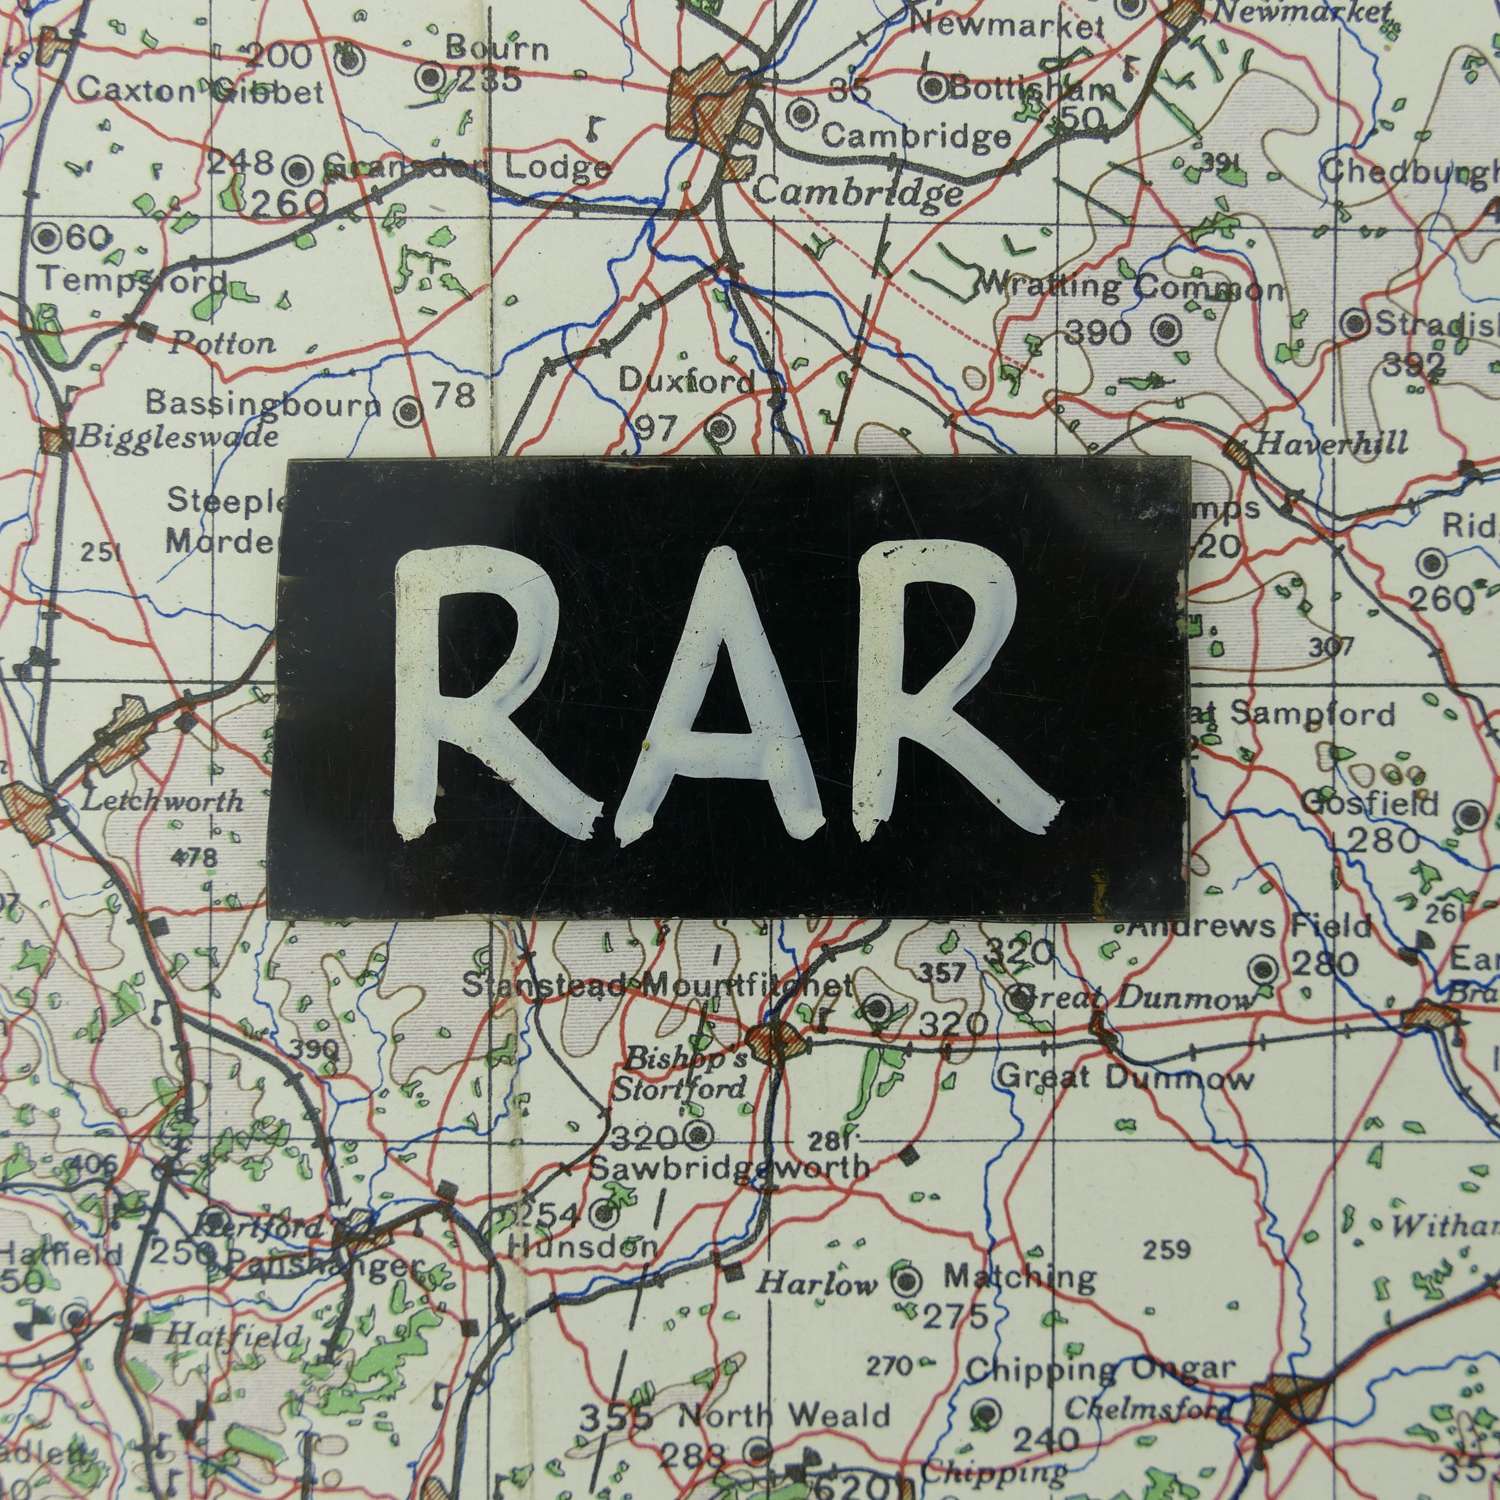 RAF operations room plaque - 'RAR'